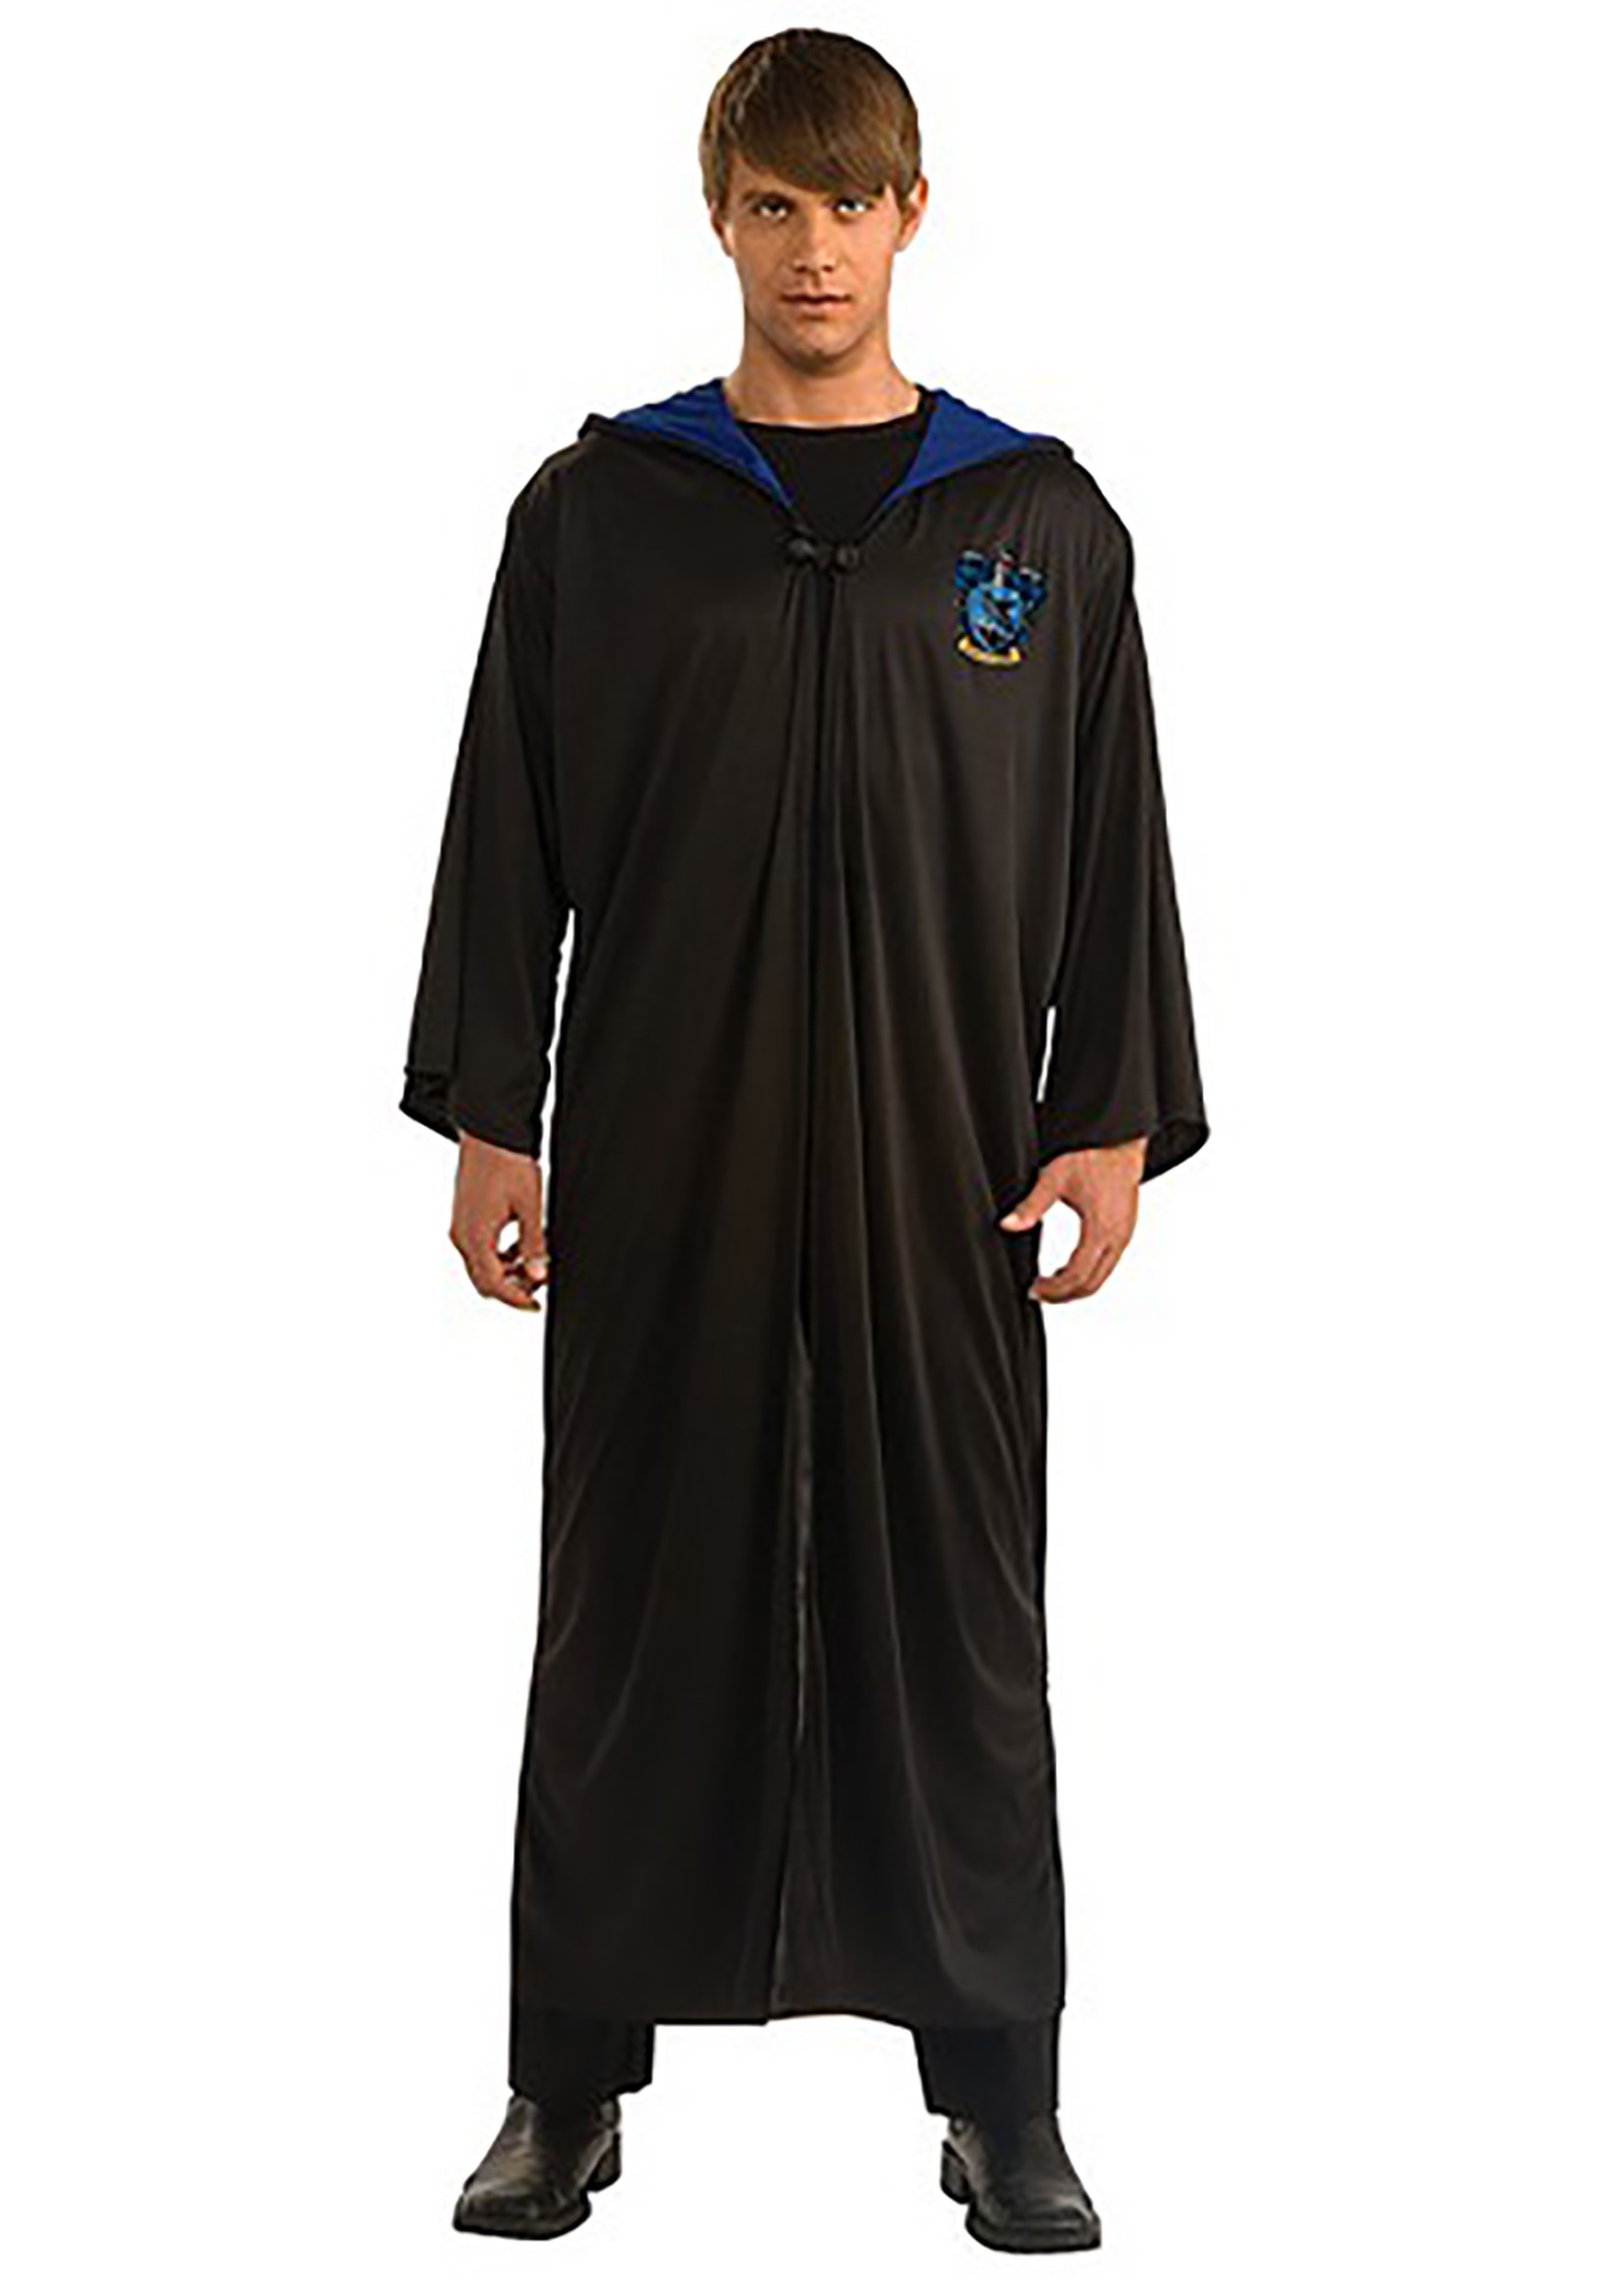 Adult Ravenclaw Robe Costume